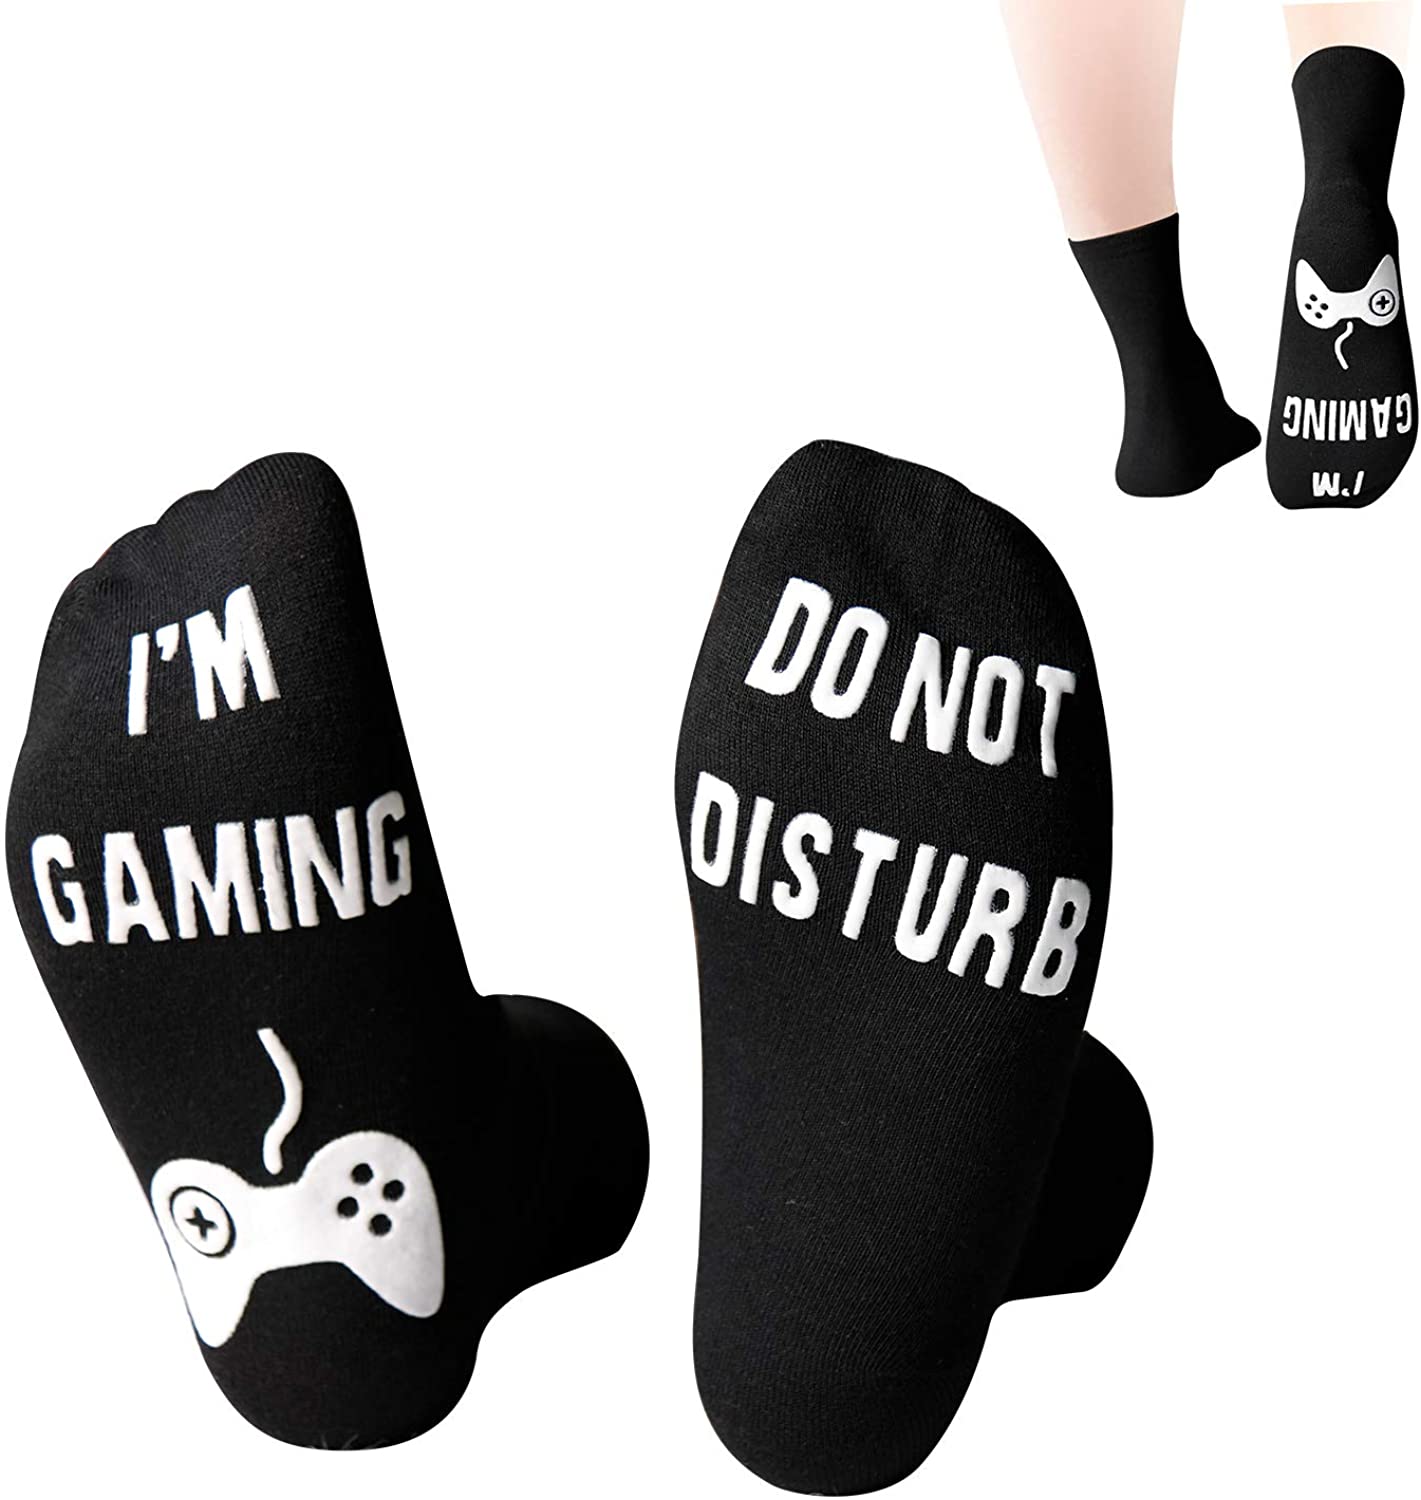 Do Not Disturb I'm Gaming Socks, Gaming Sock Funny Novelty, Black, Size ...